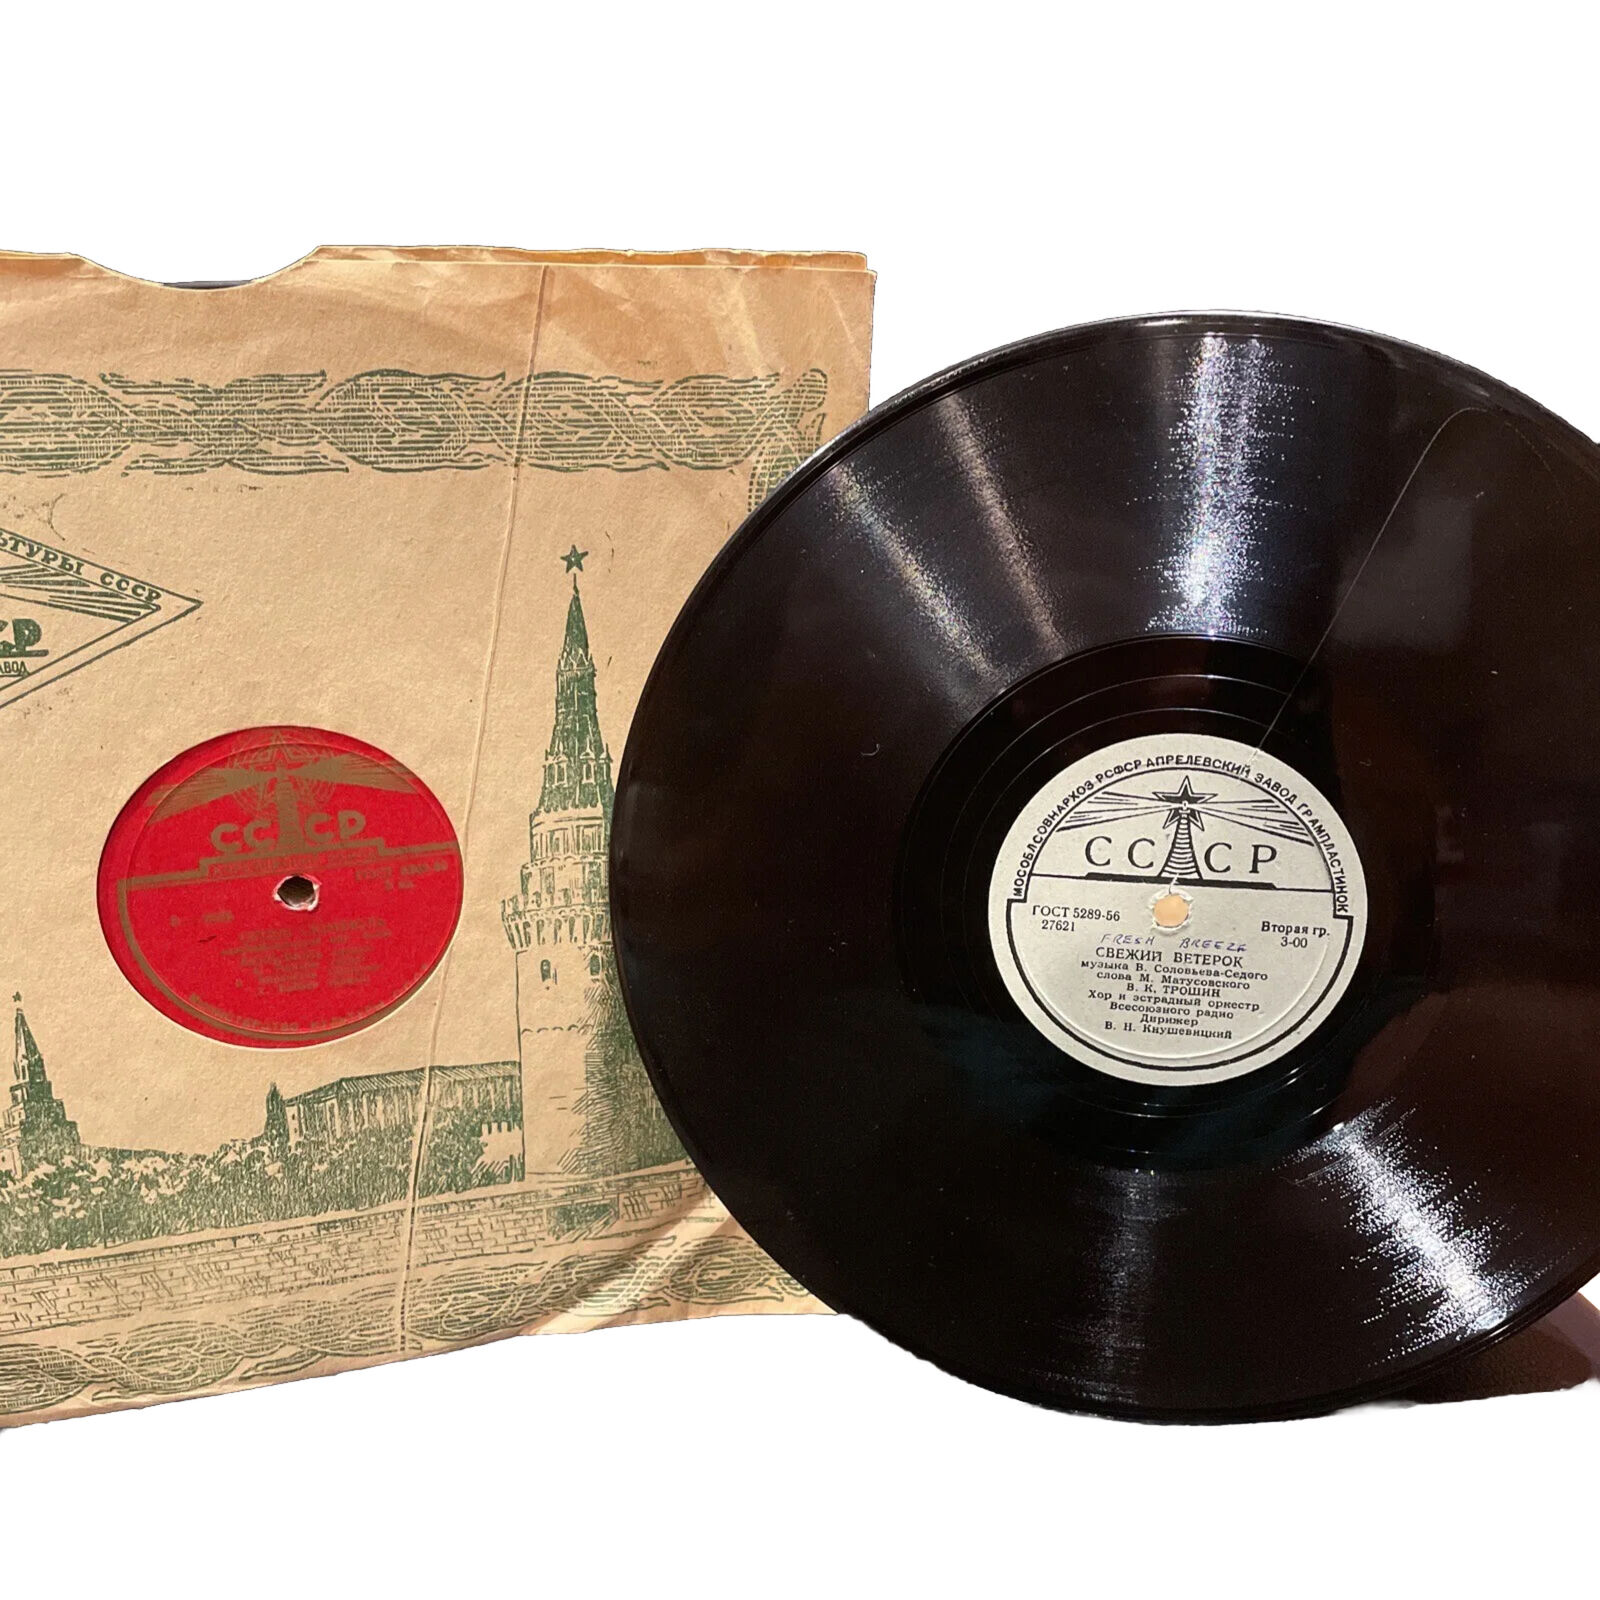 2 Vintage CCCP Russian Records 1 Has Original Sleeve 78 Speed